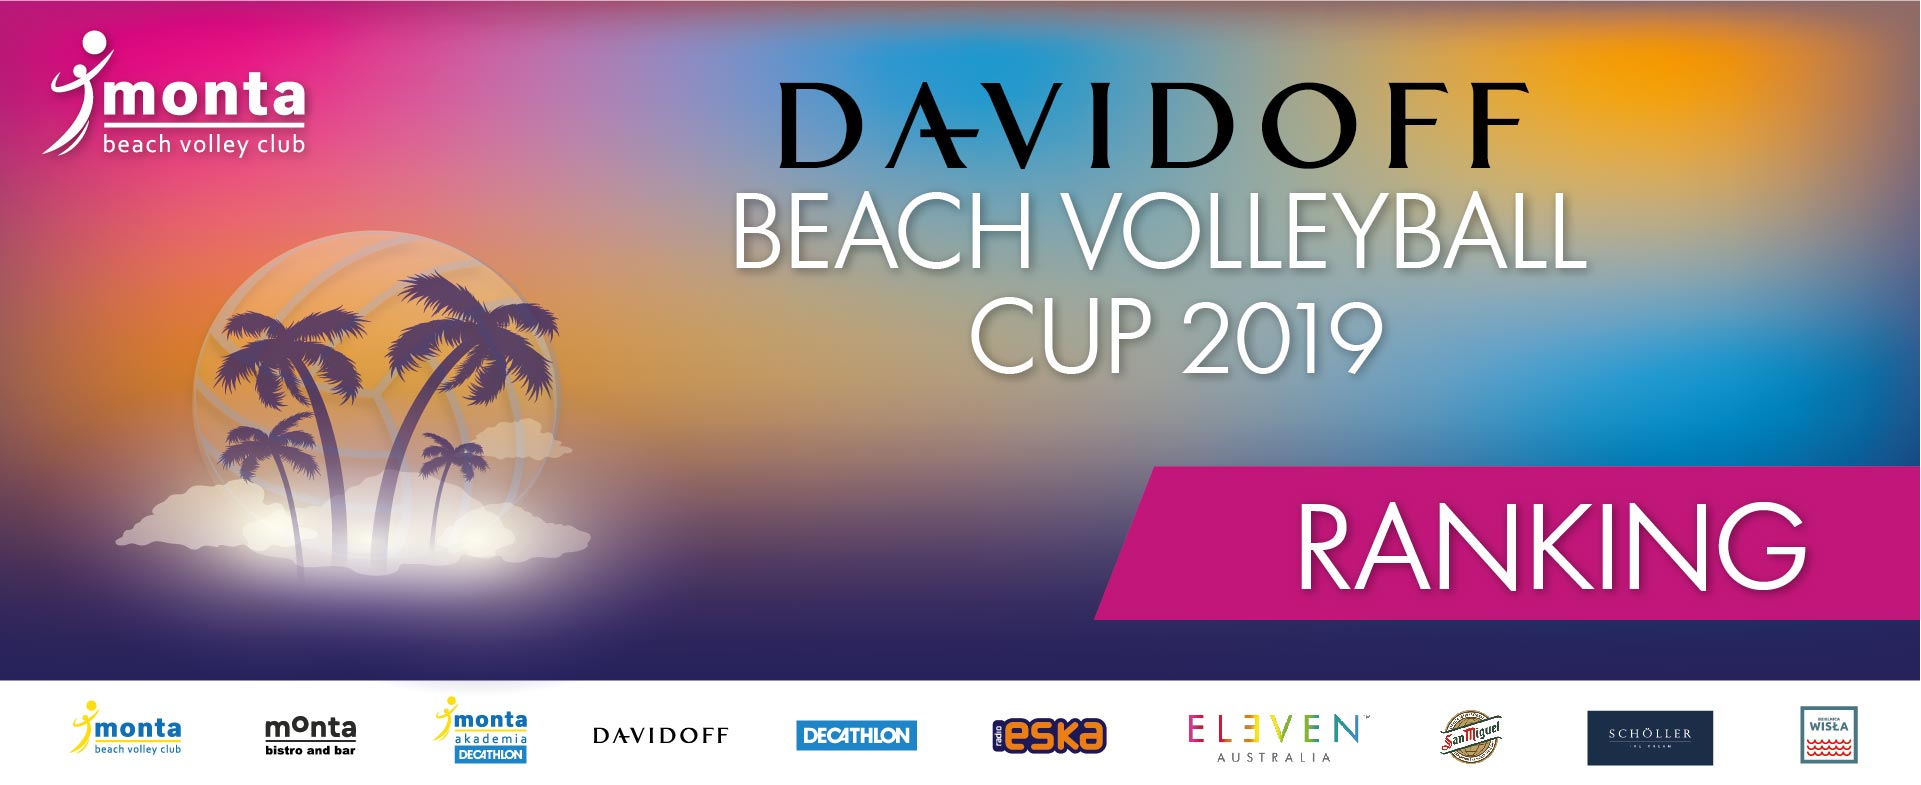 Aktualny ranking Davidoff Beach Volleyball Cup 2019